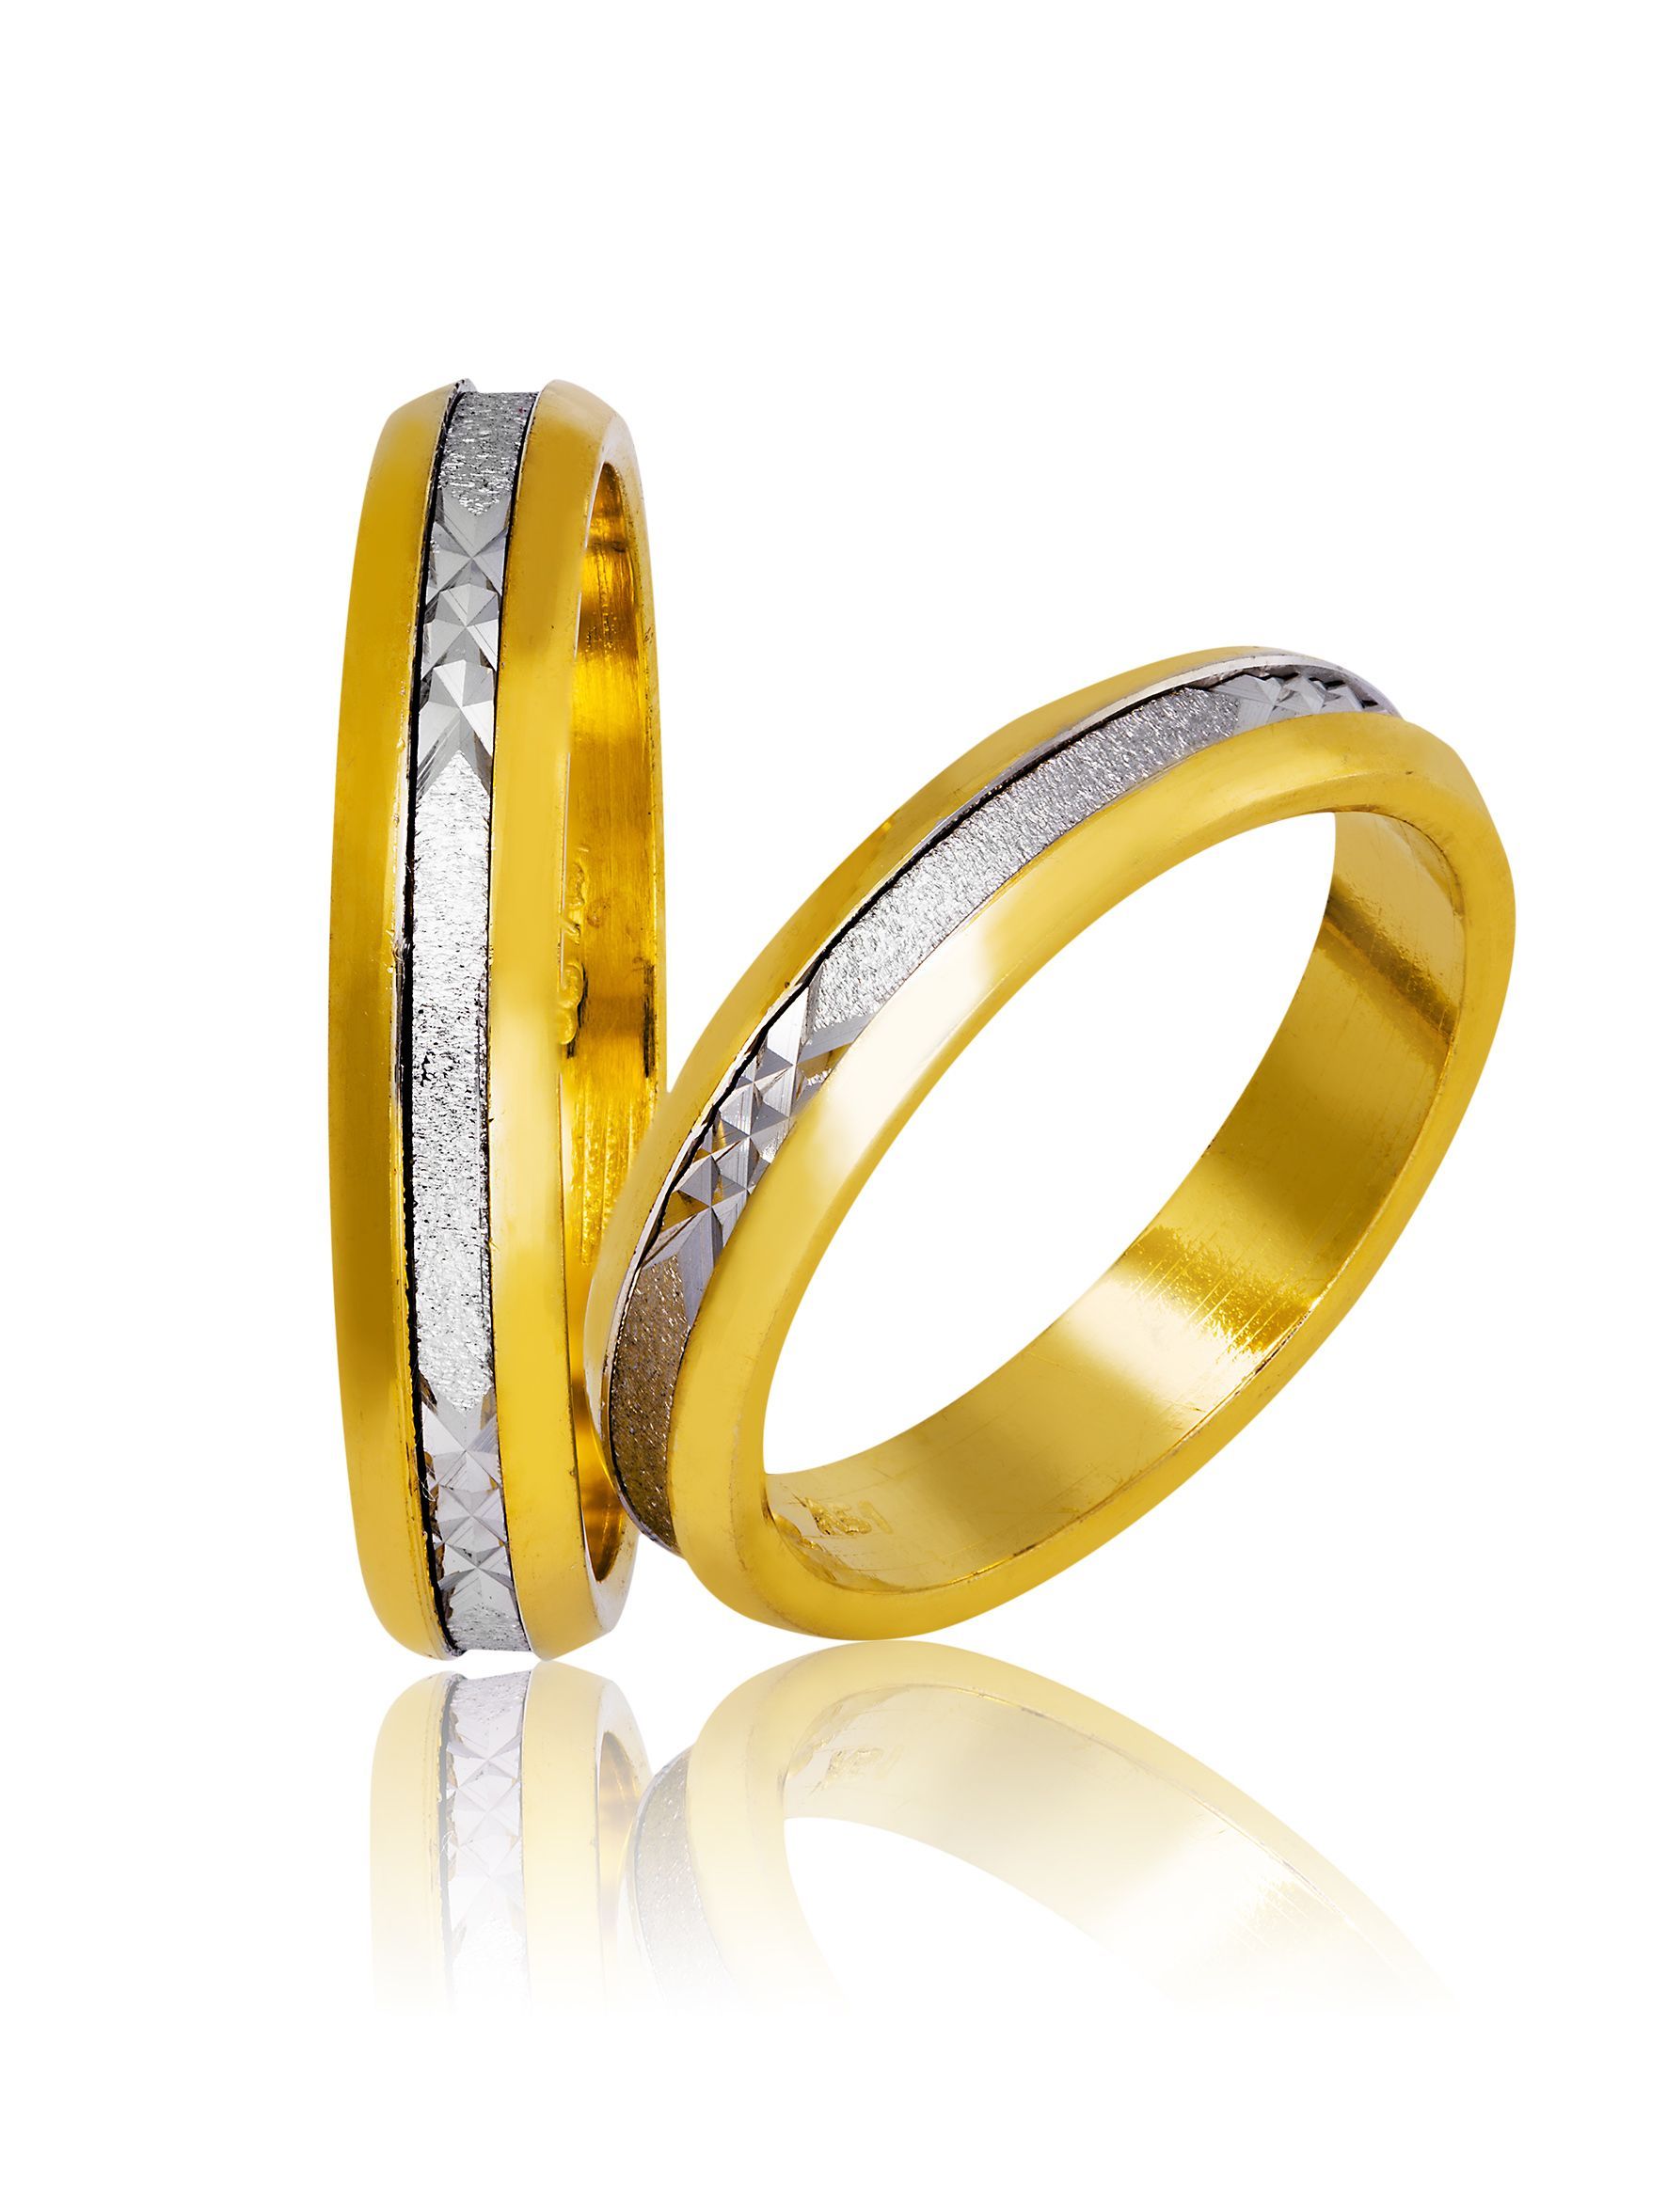 White gold & gold wedding rings 4.3mm (code 722)